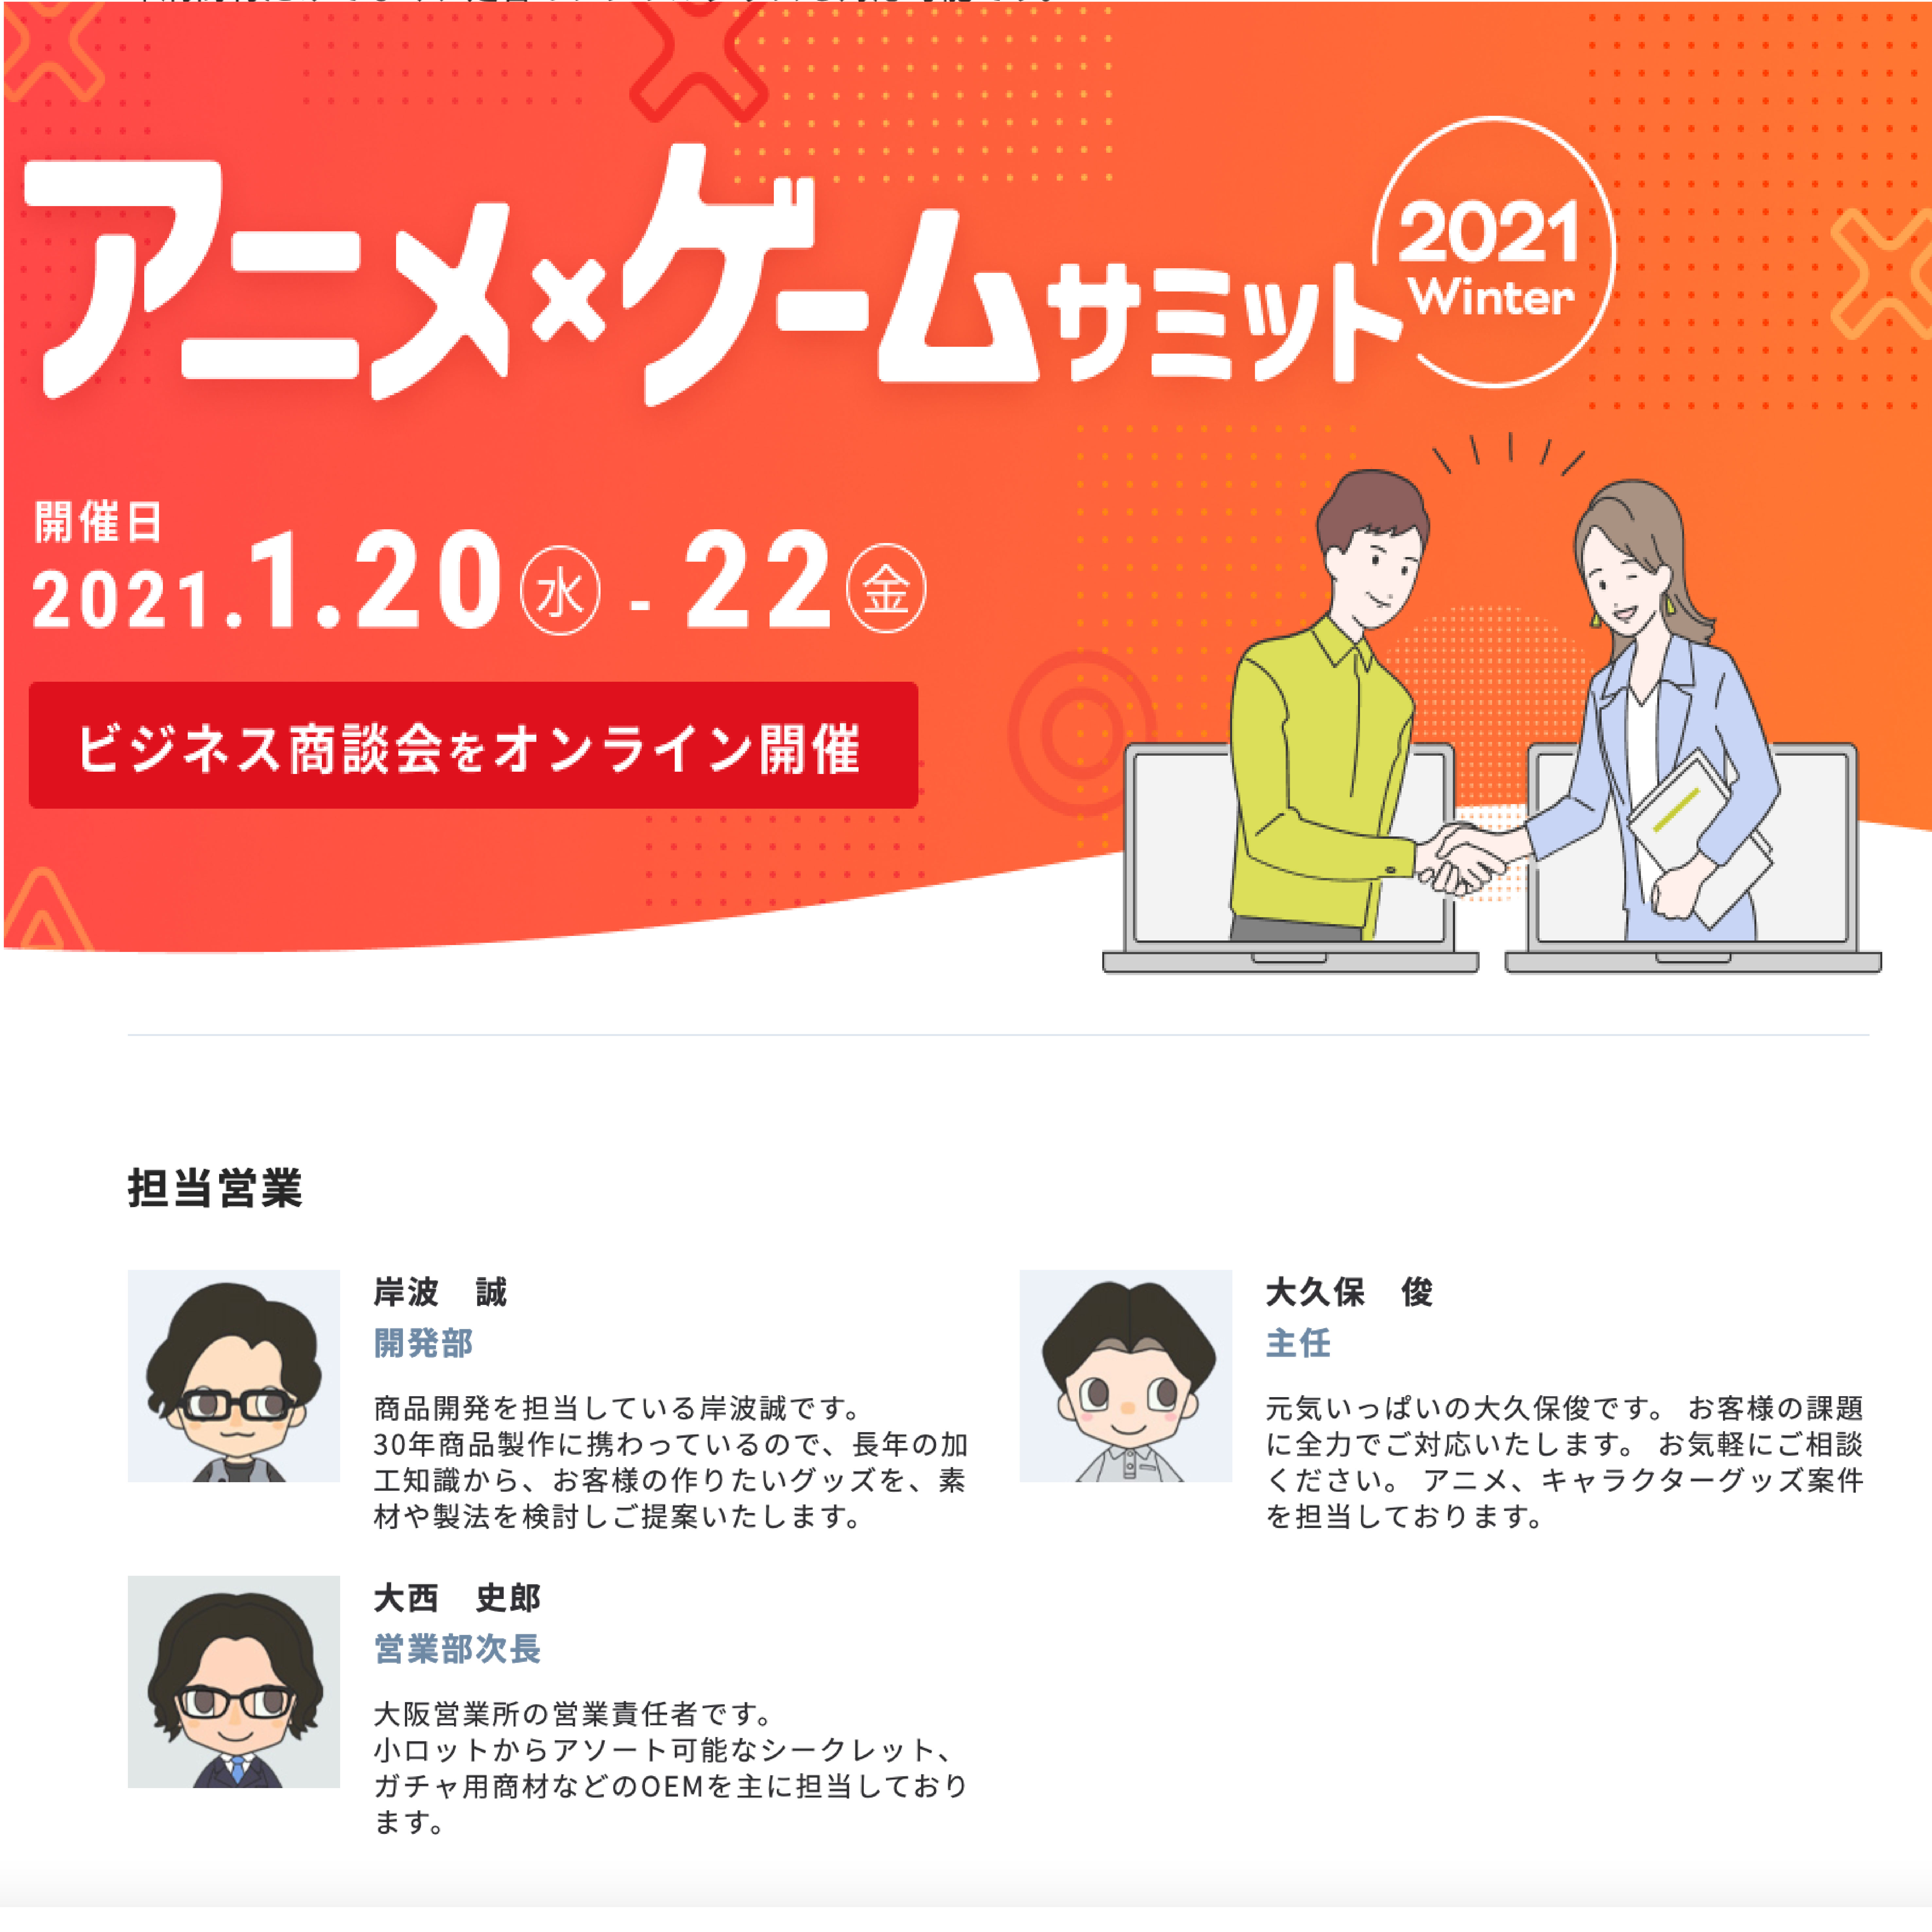 Anime / Game Summit 2021 Winter